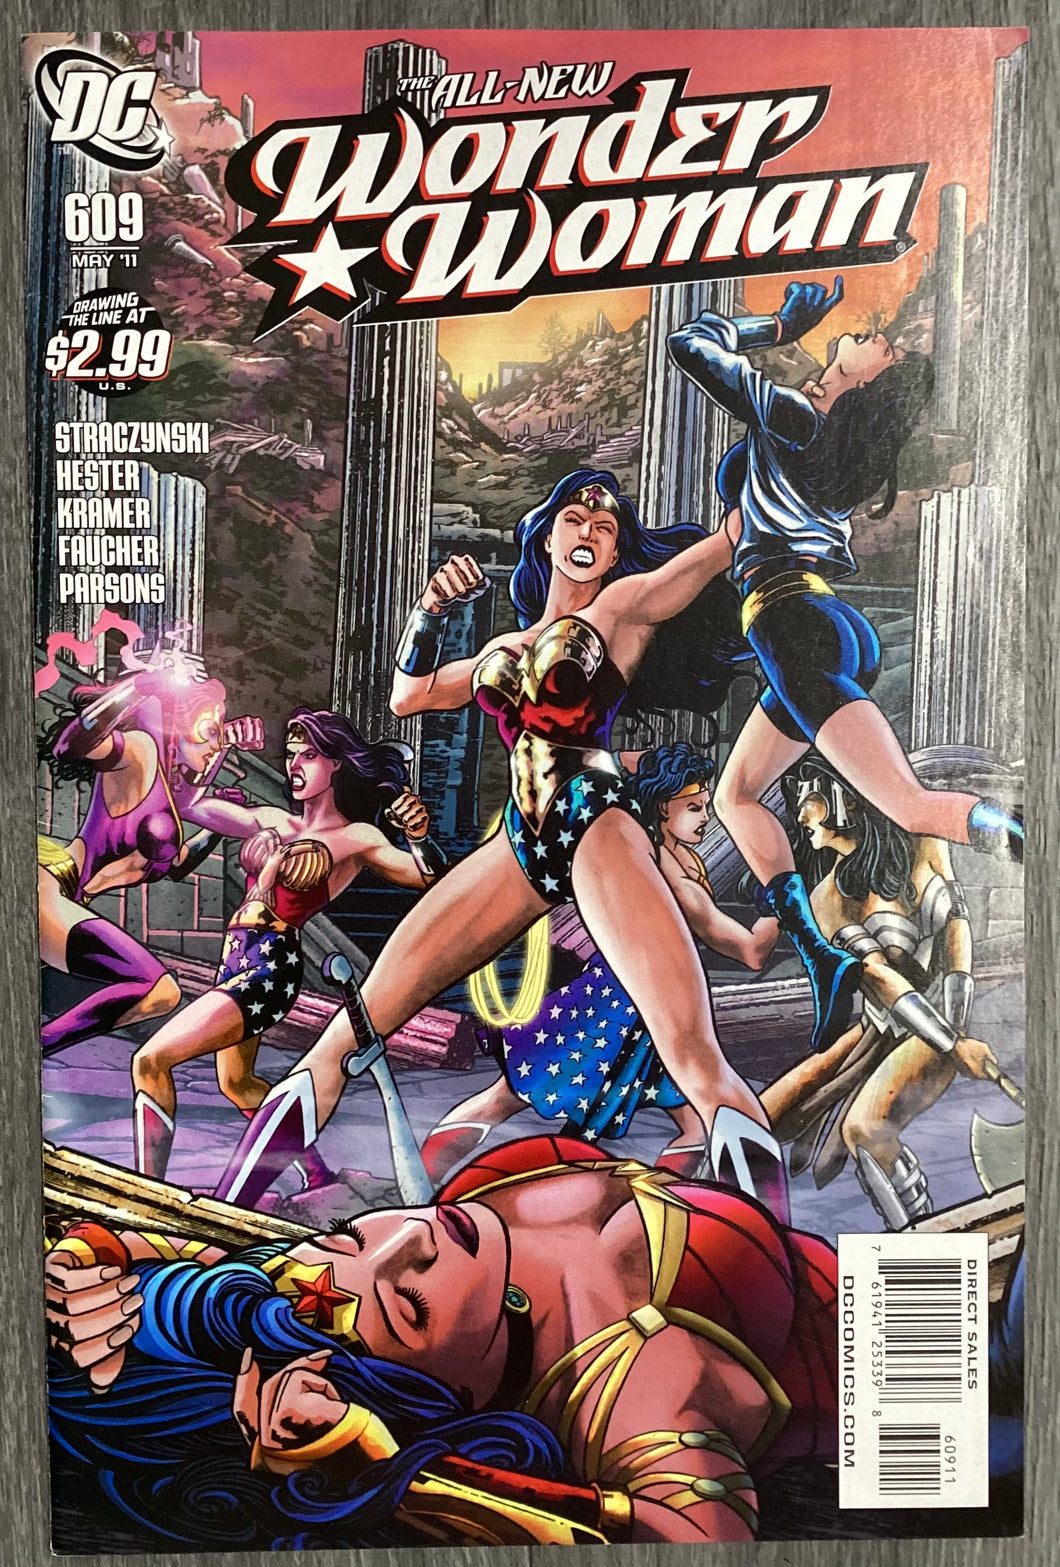 Wonder Woman No. #609 2011 DC Comics